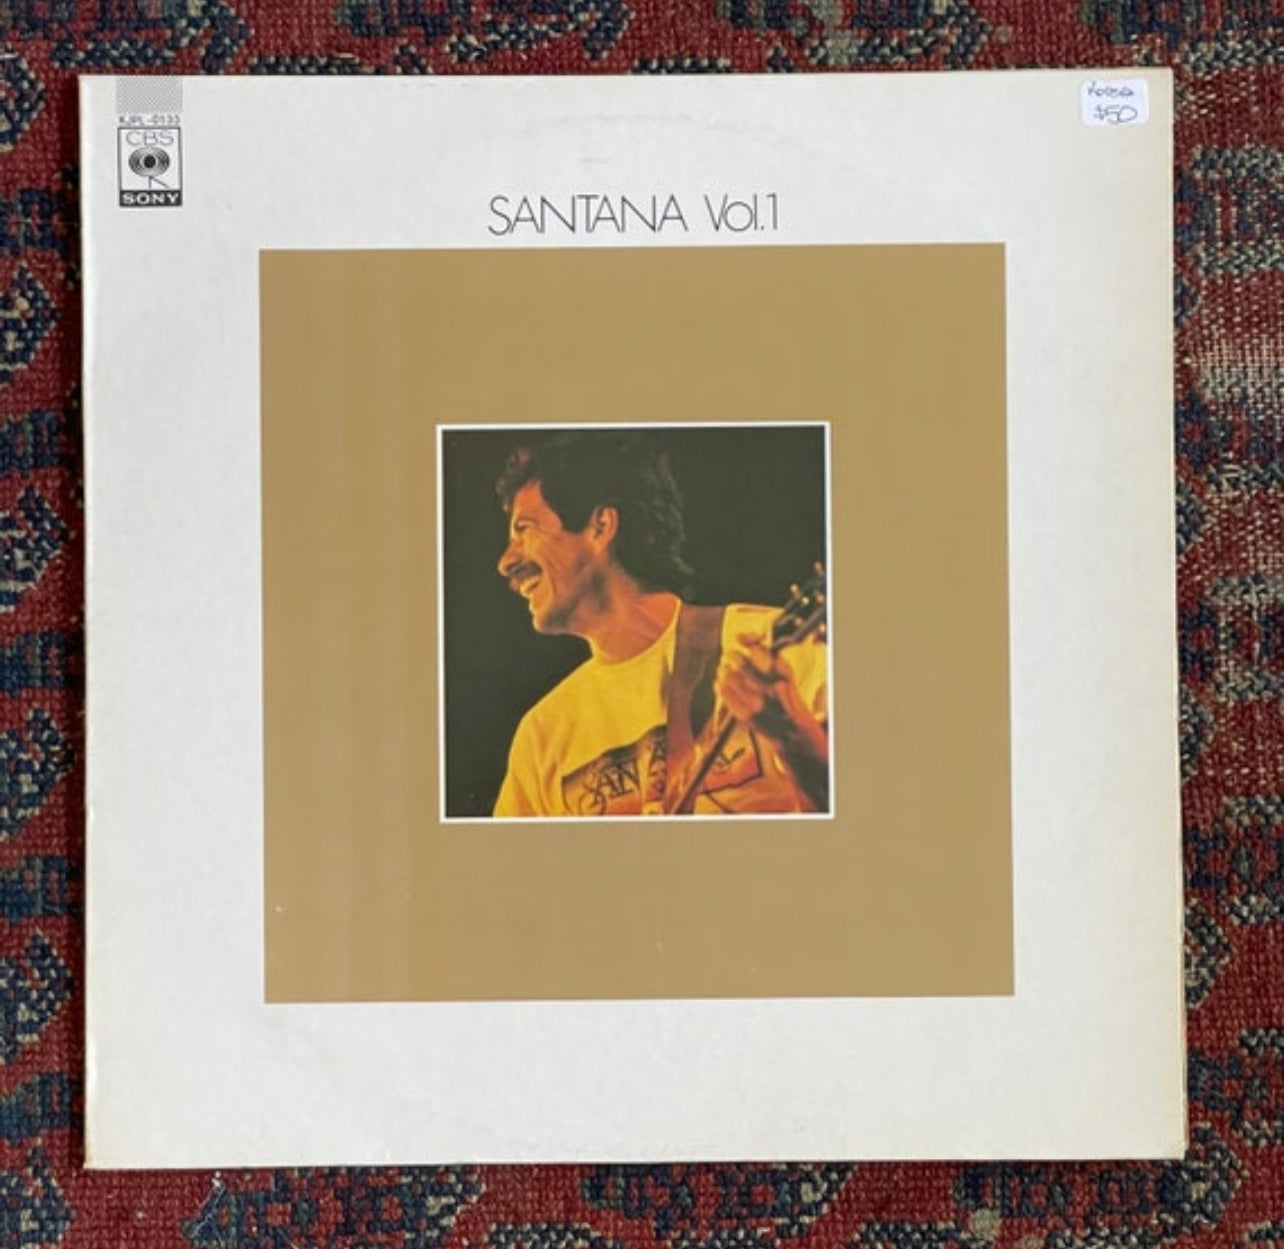 Santana Vol. 1